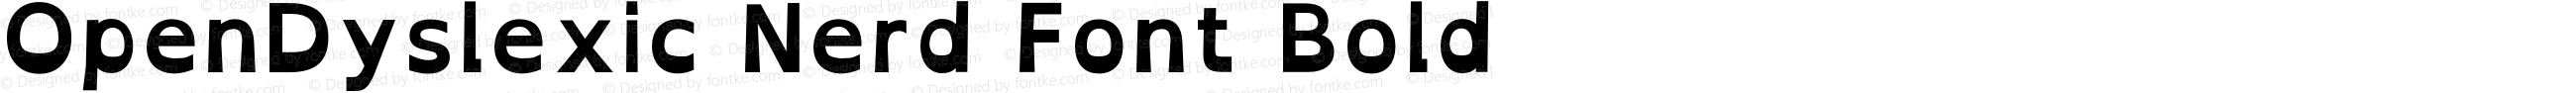 OpenDyslexic Bold Nerd Font Complete